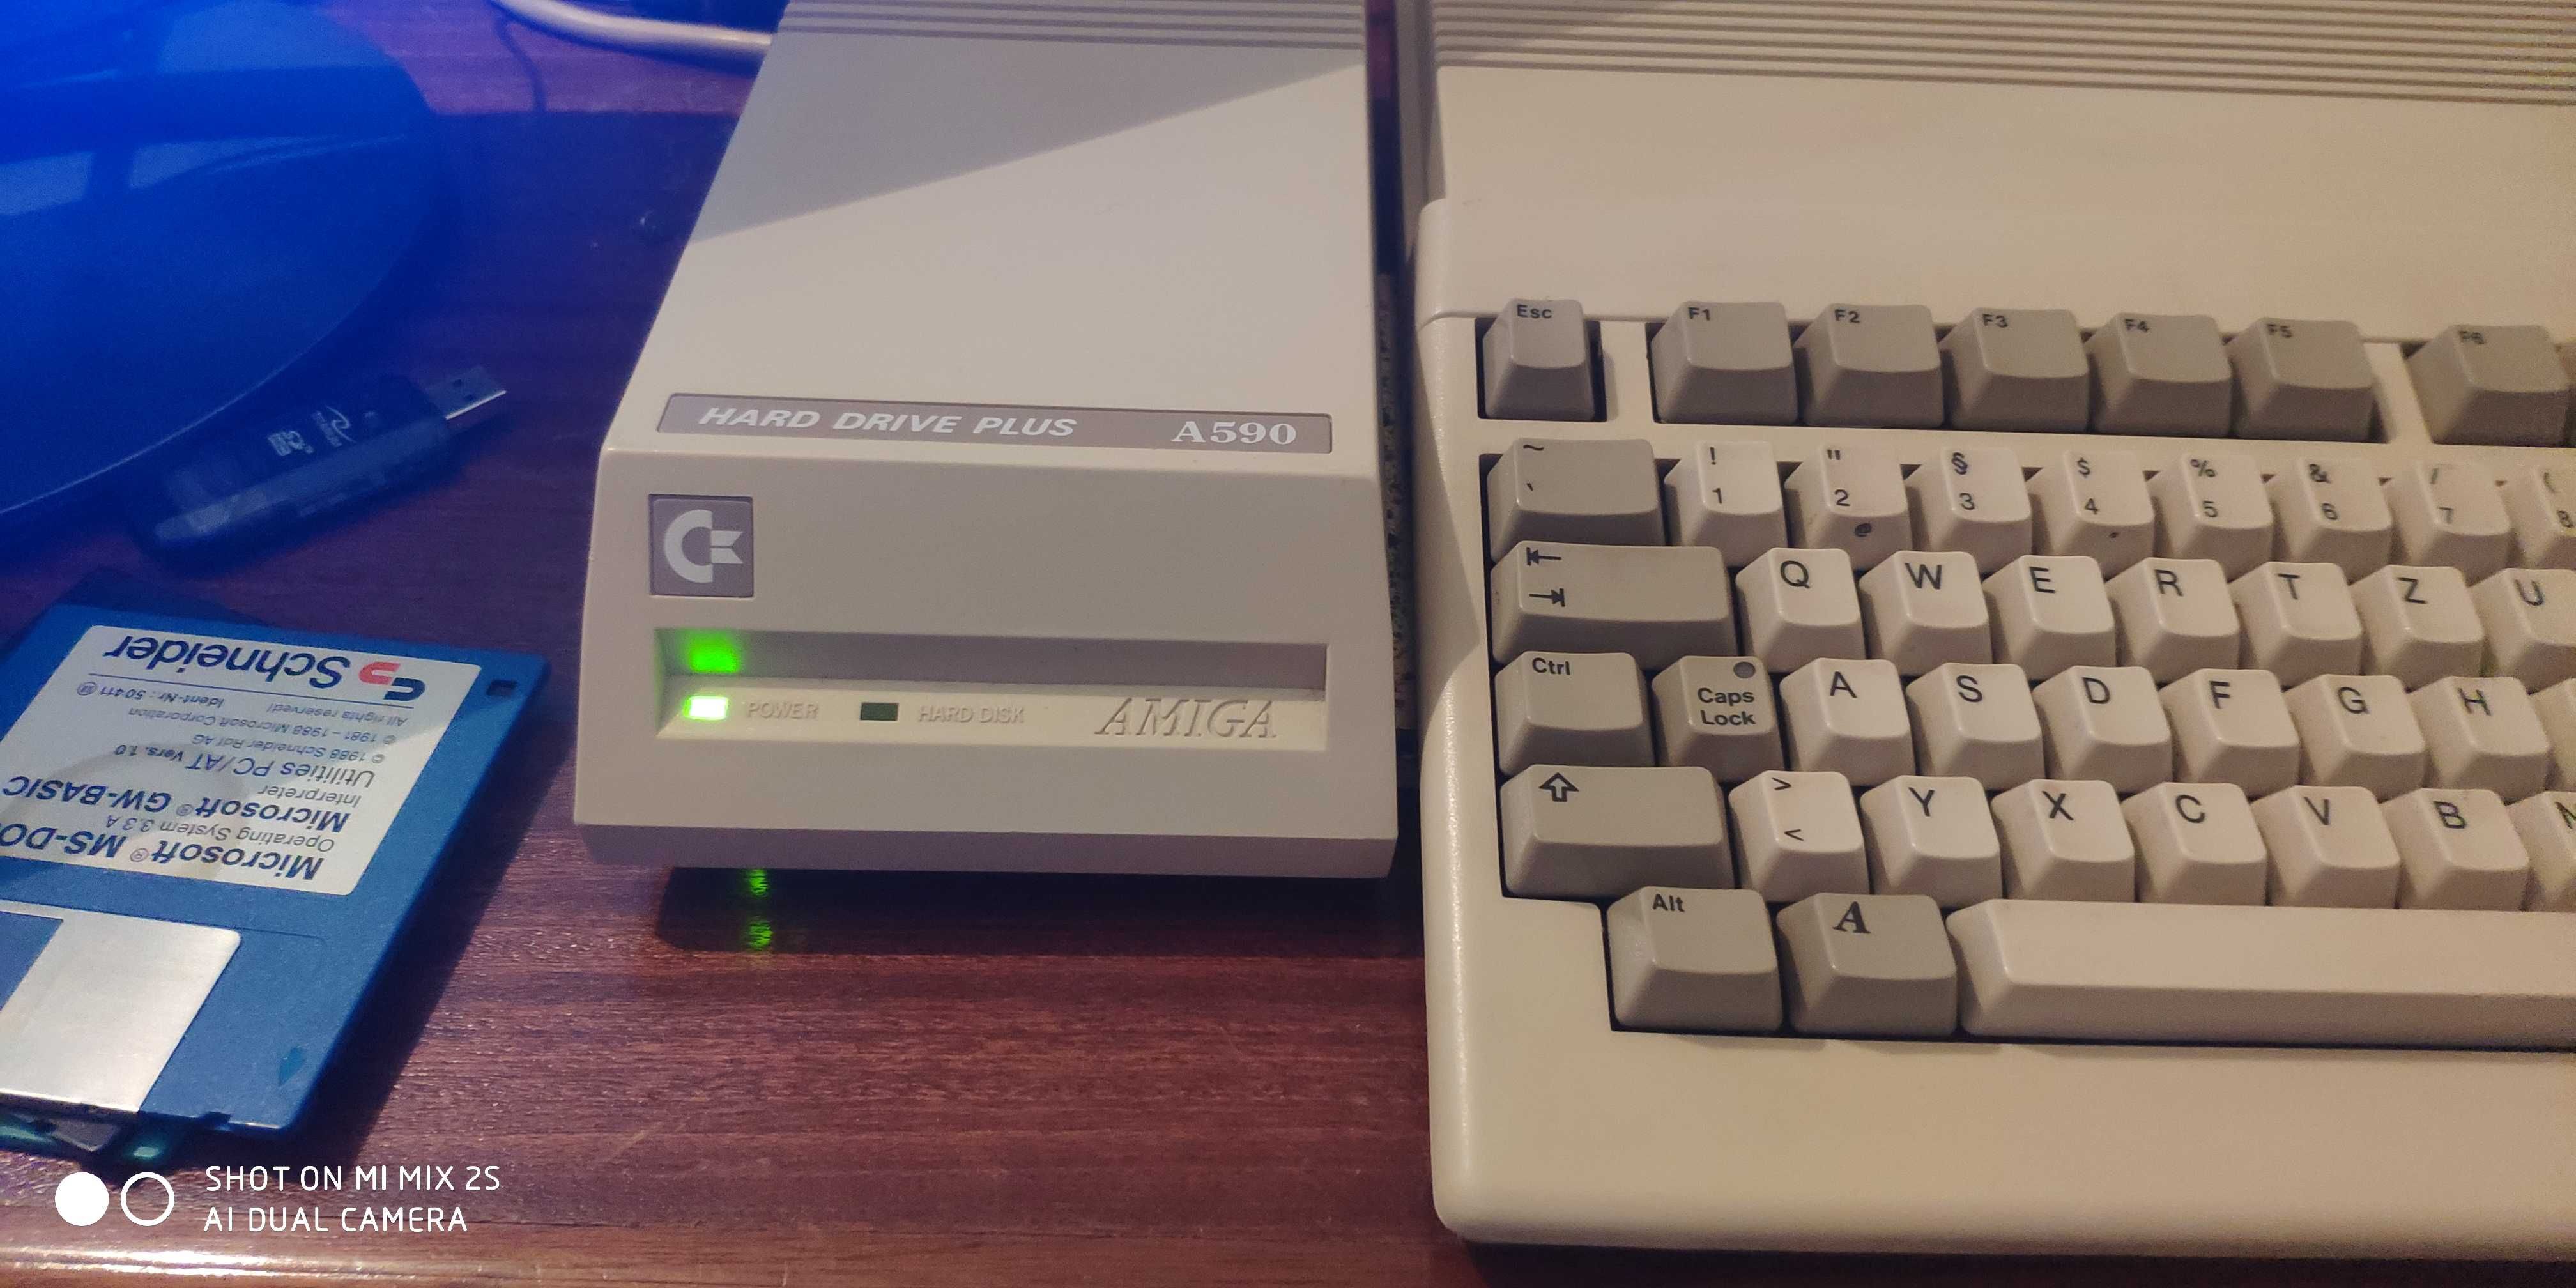 Commodore Amiga 500 A590 KCS Power PC Board